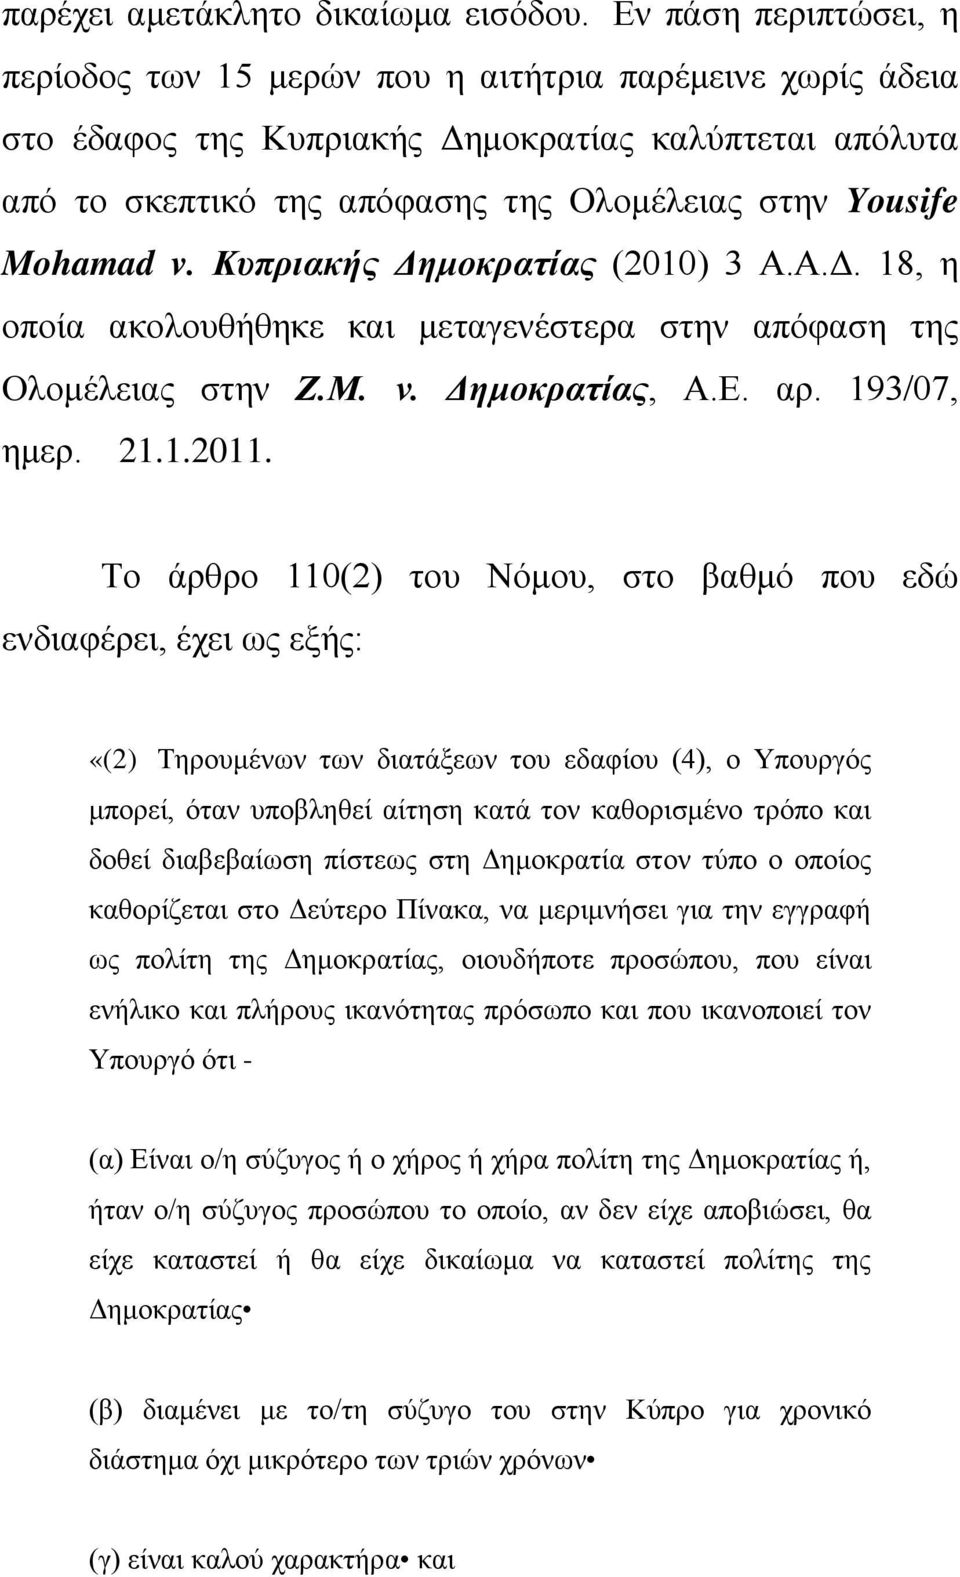 Mohamad v. Κυπριακής Δημοκρατίας (2010) 3 Α.Α.Δ. 18, η οποία ακολουθήθηκε και μεταγενέστερα στην απόφαση της Ολομέλειας στην Ζ.Μ. ν. Δημοκρατίας, Α.Ε. αρ. 193/07, ημερ. 21.1.2011.